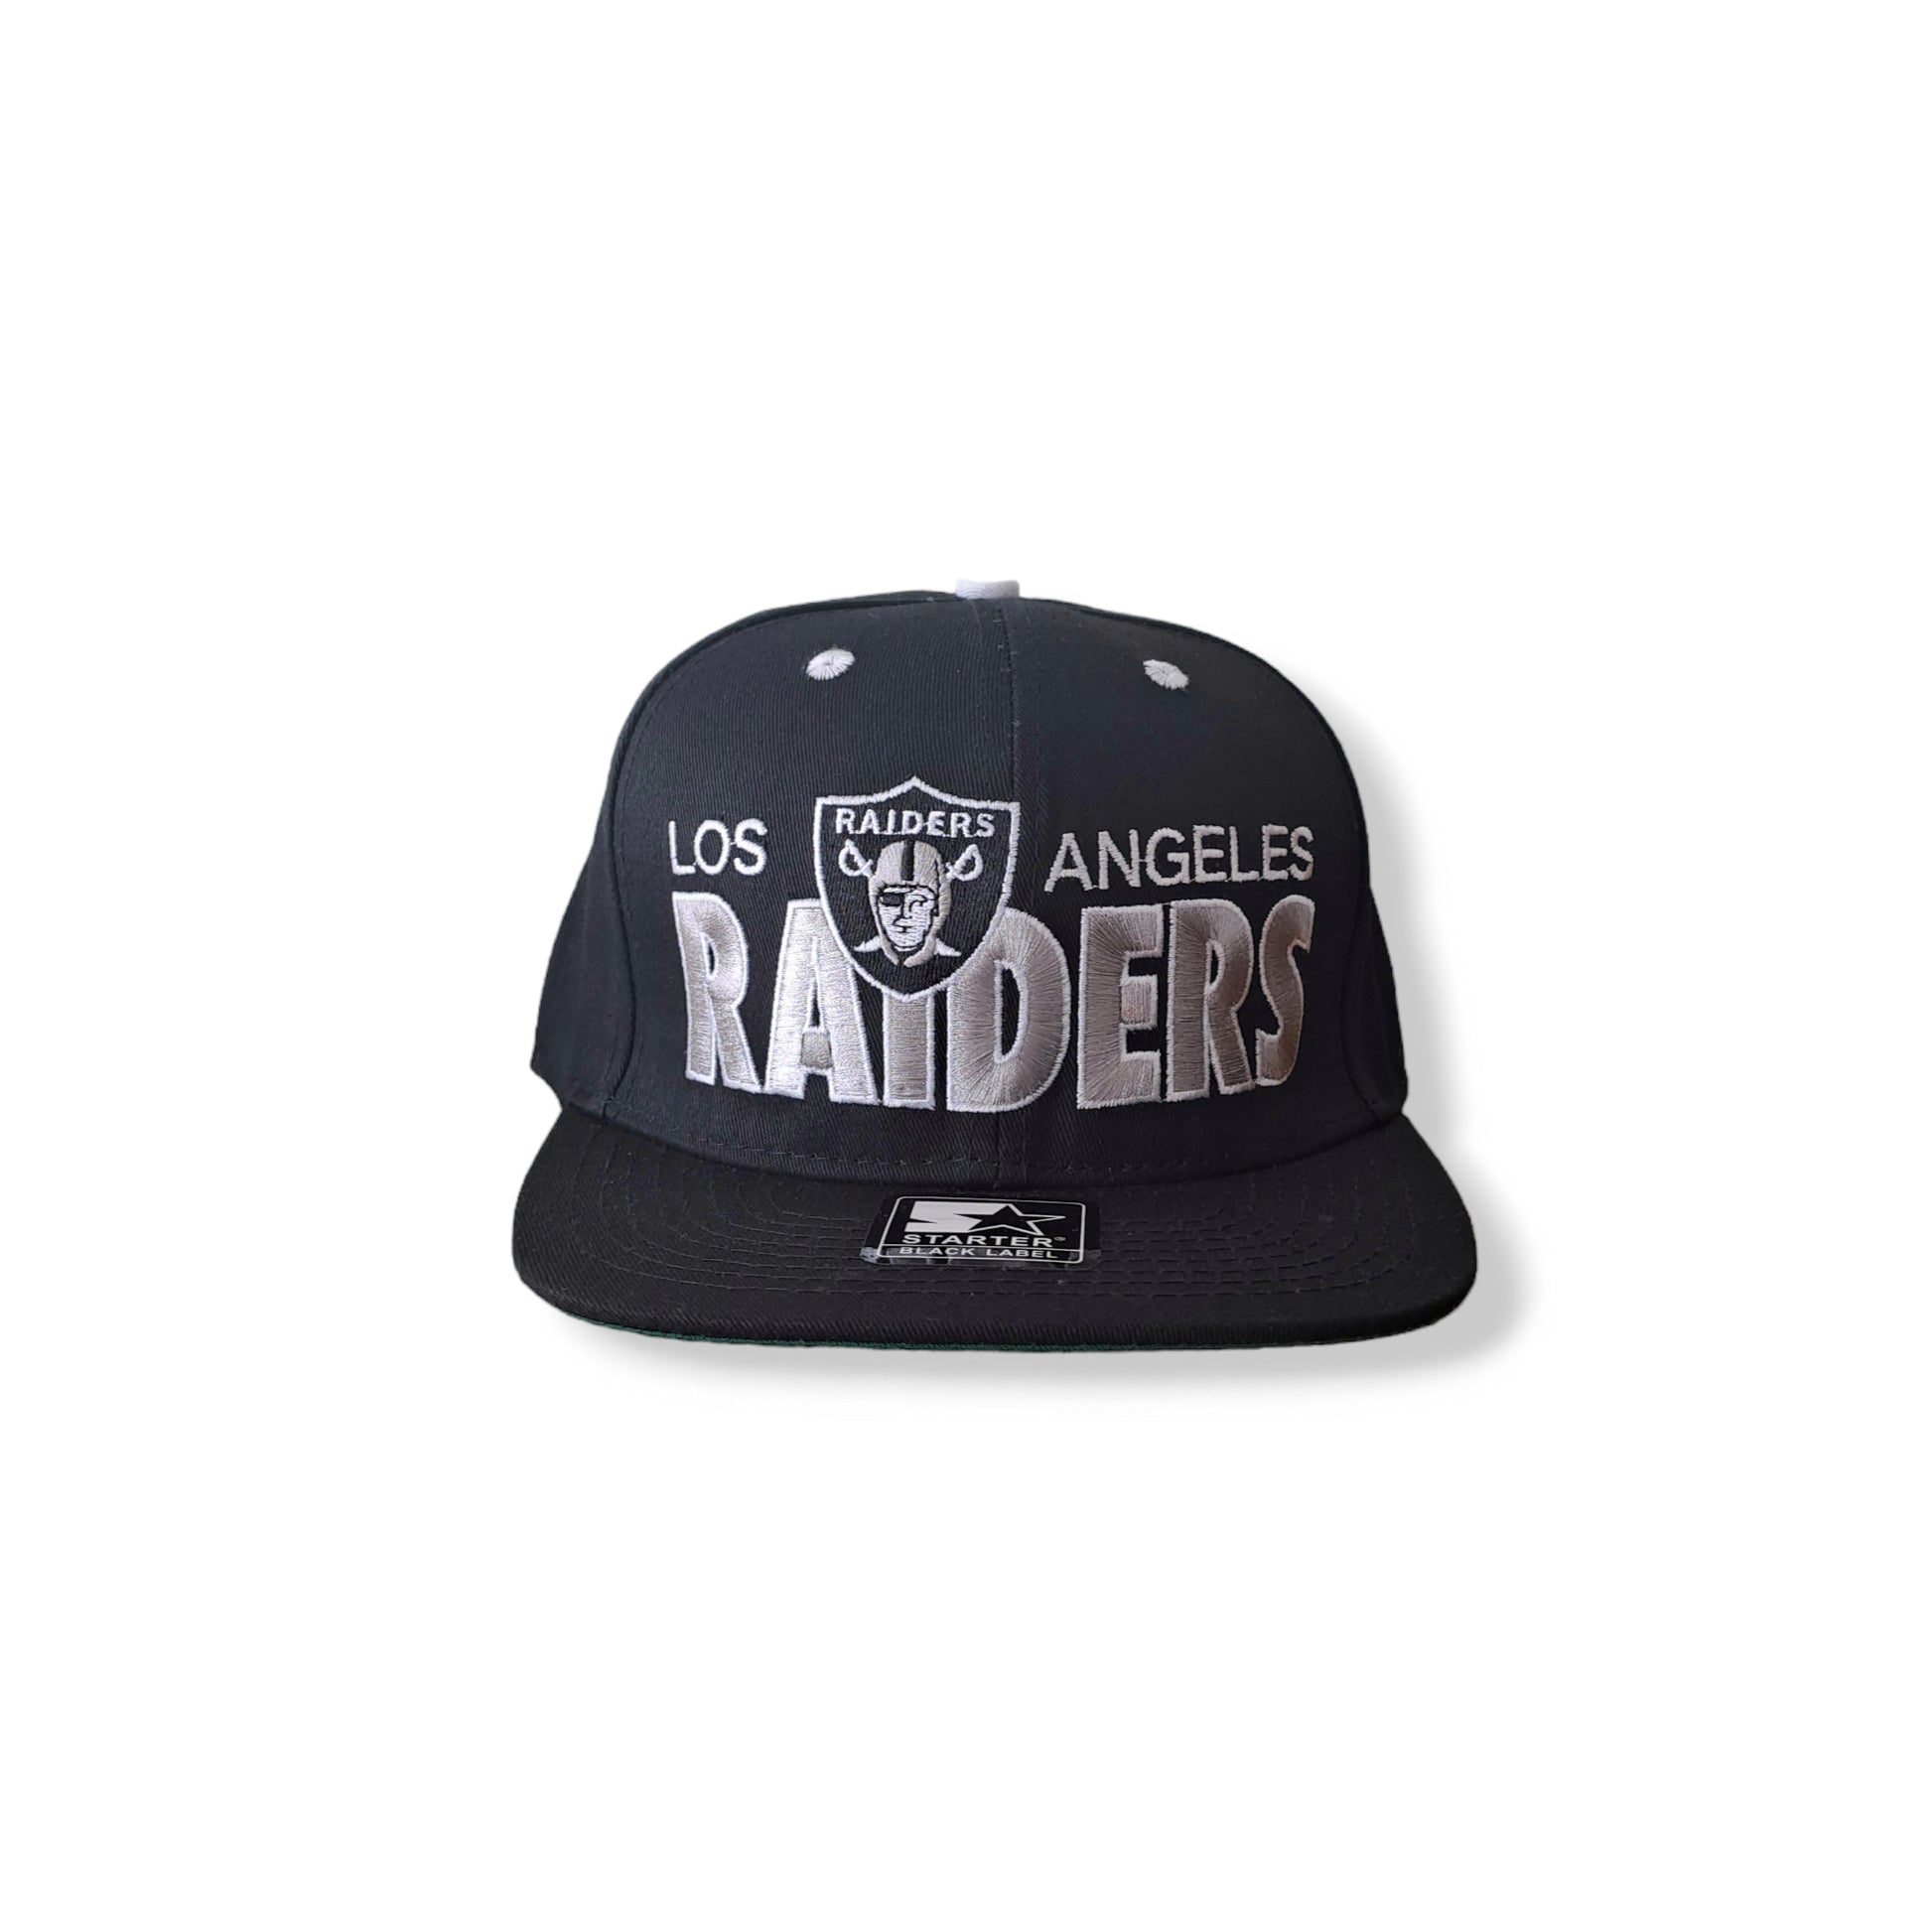 Los Angeles Raiders hat